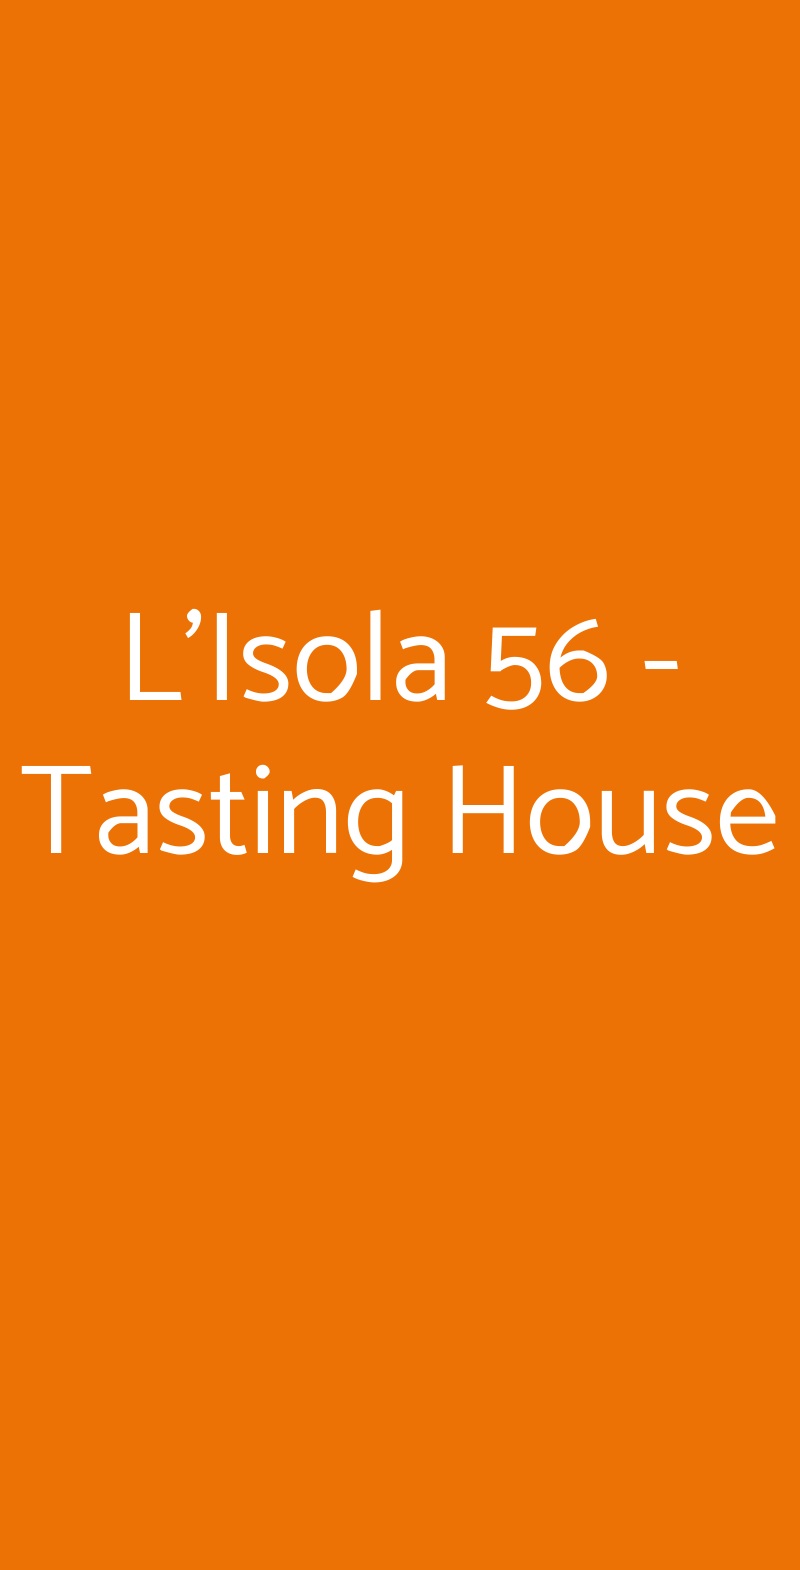 L'Isola 56 - Tasting House Milano menù 1 pagina